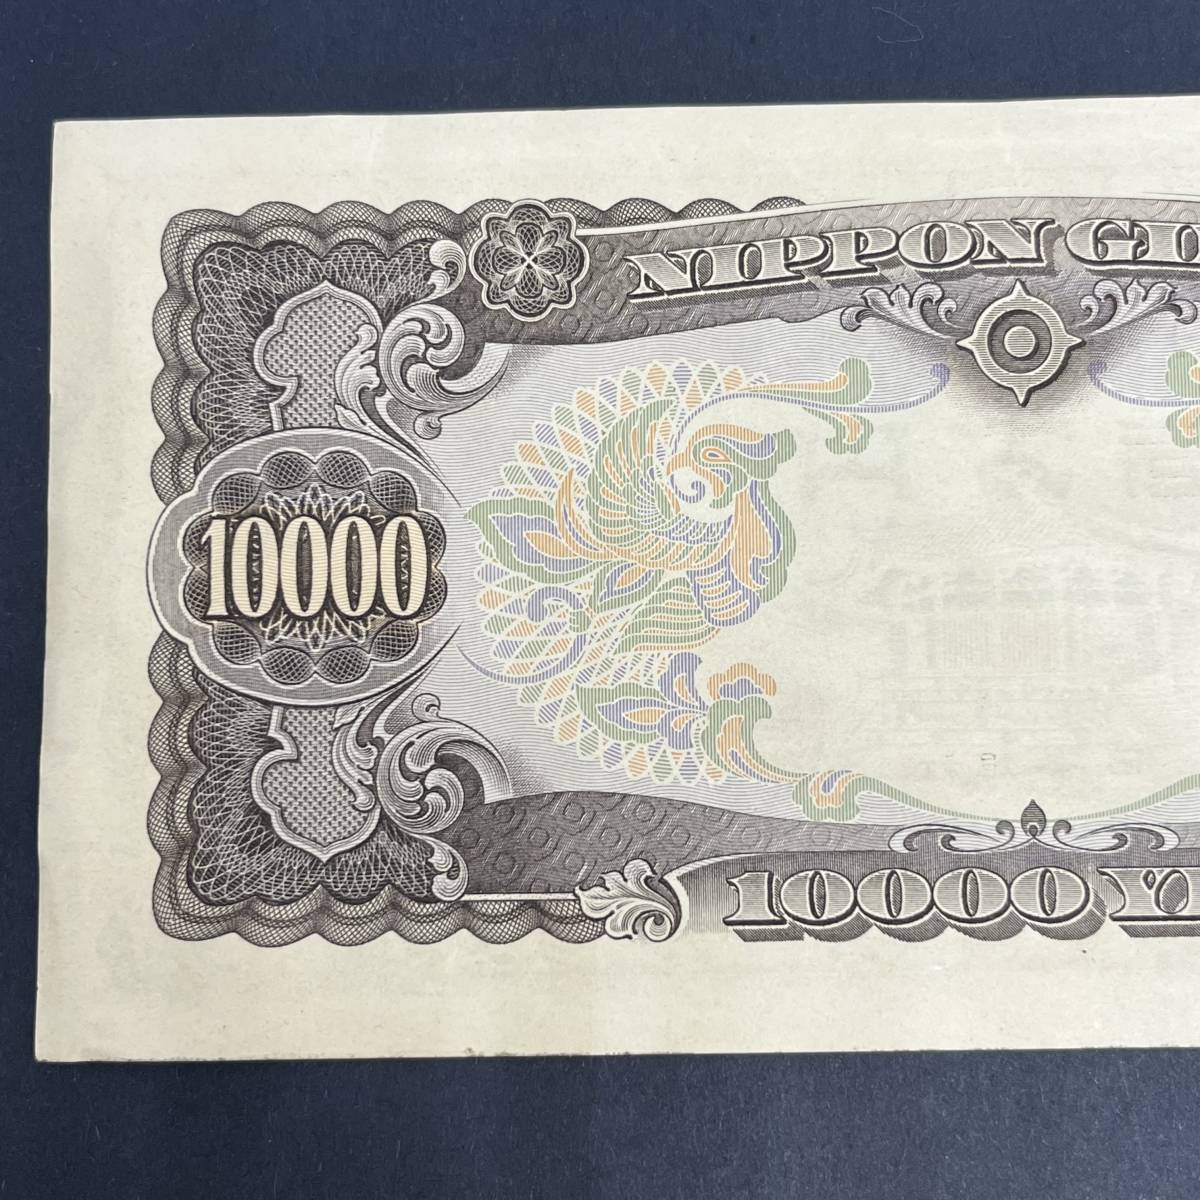 旧紙幣 1万円札 一万円札 聖徳太子 年代物 アンティーク